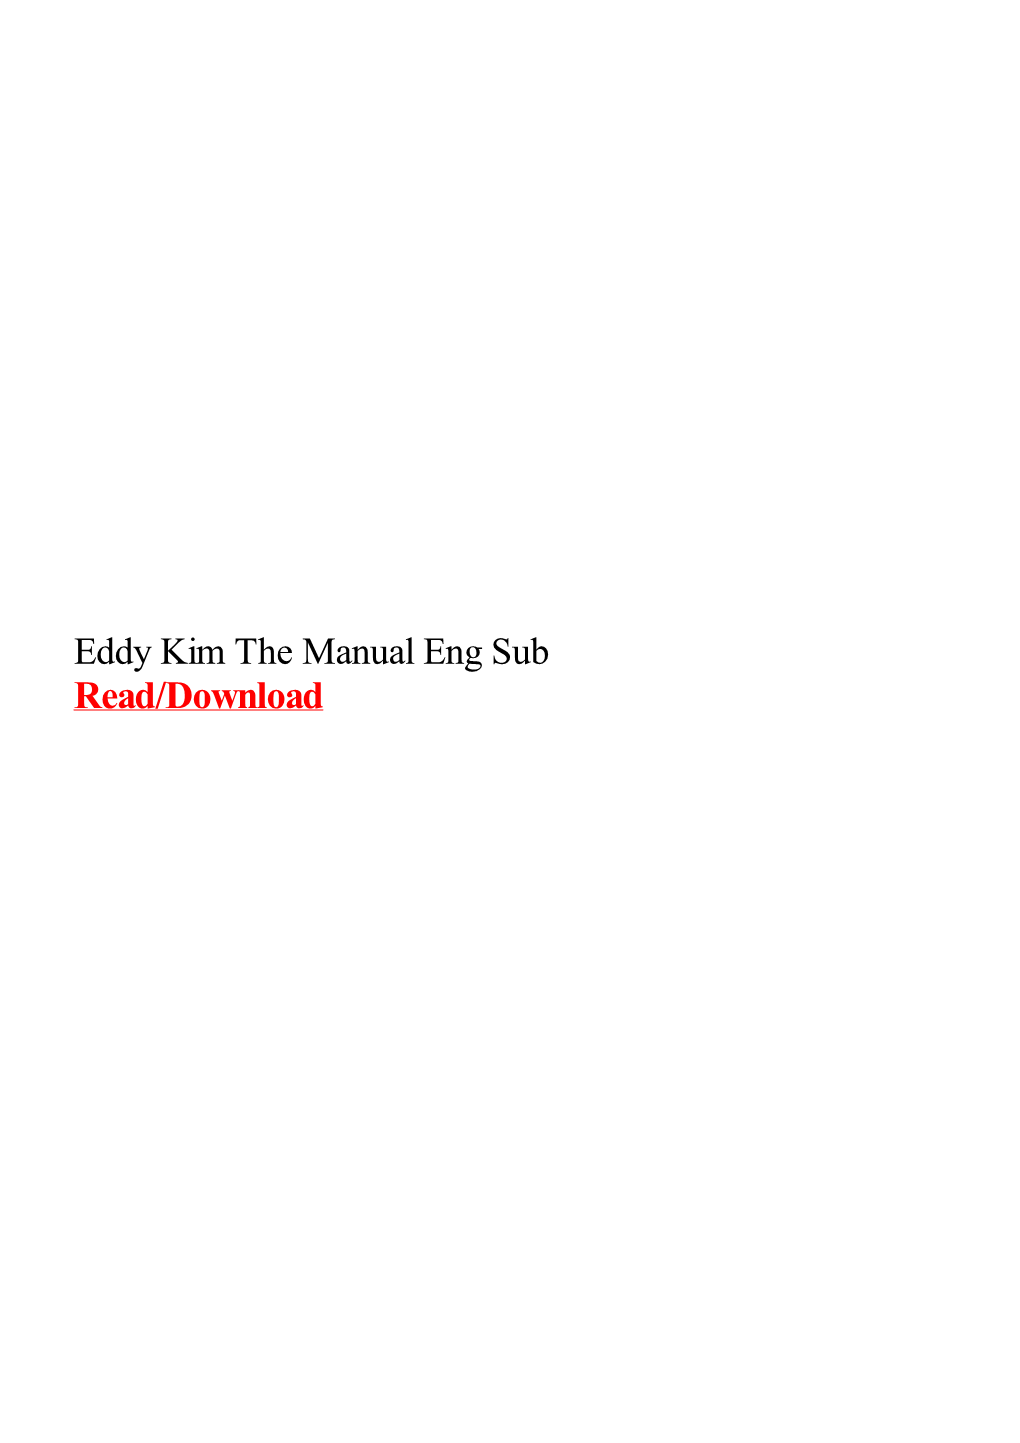 Eddy Kim the Manual Eng Sub